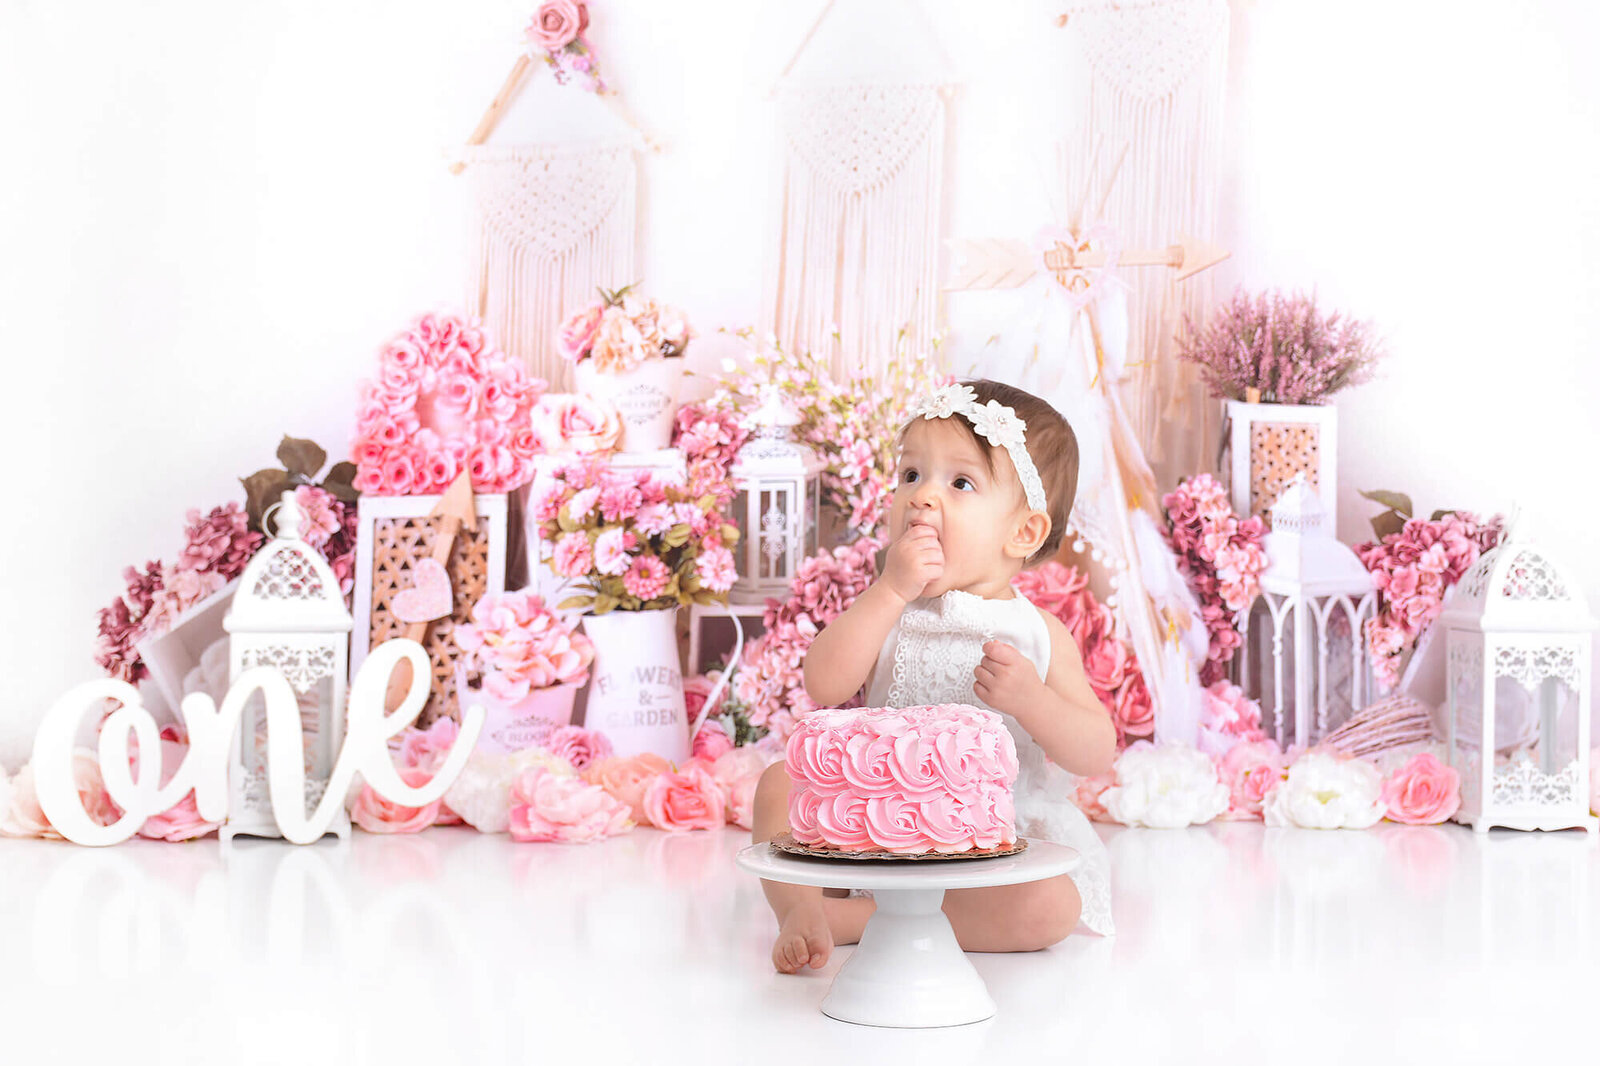 baby girl eats her birthday cake at her photoshoot